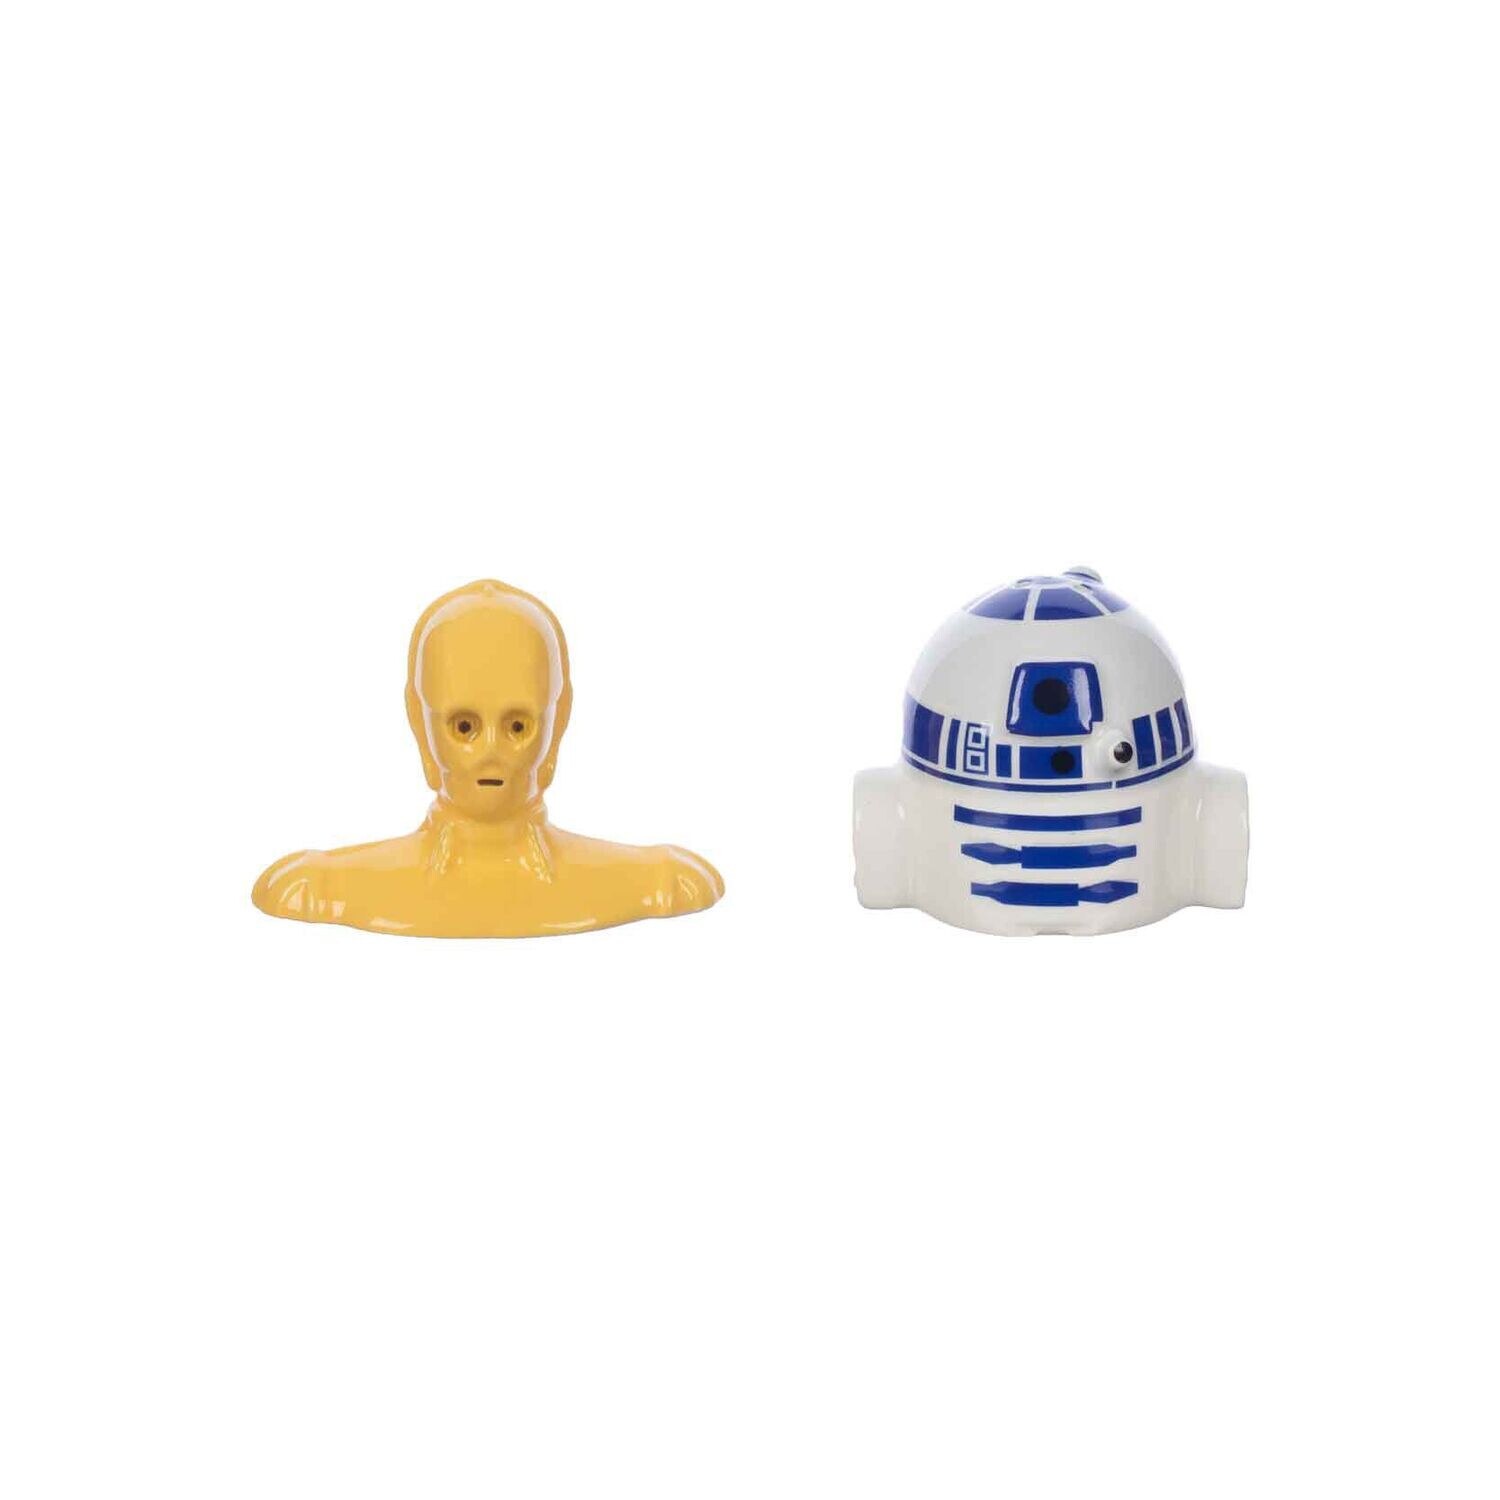 Star Wars R2-D2 and C-3PO Ceramic Salt & Pepper Shakers